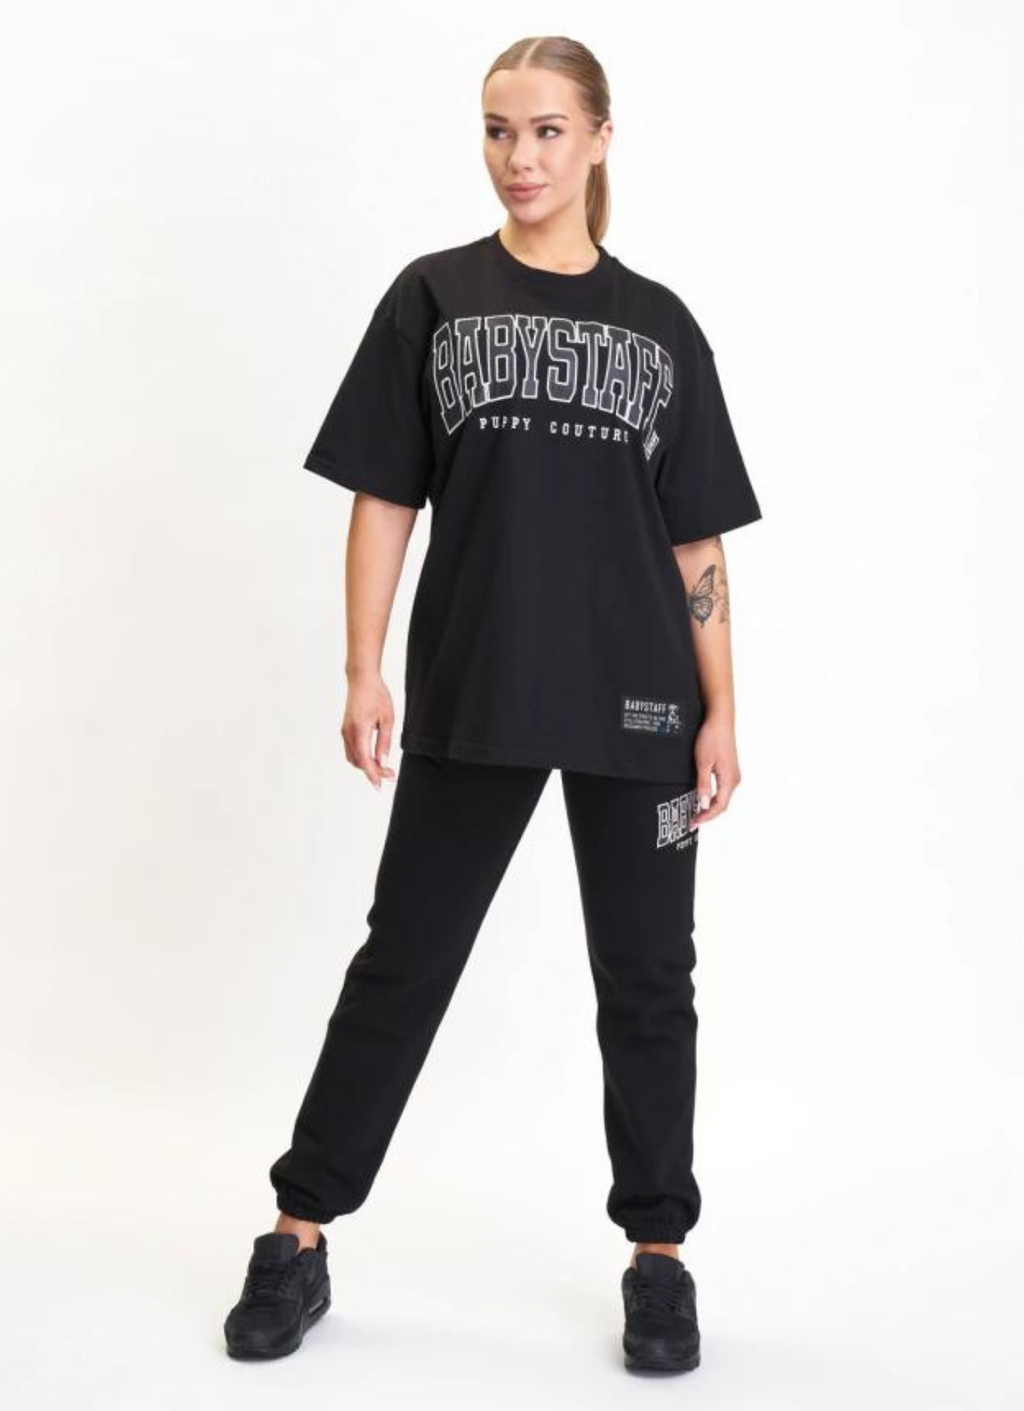 Babystaff College Oversize T-Shirt Black